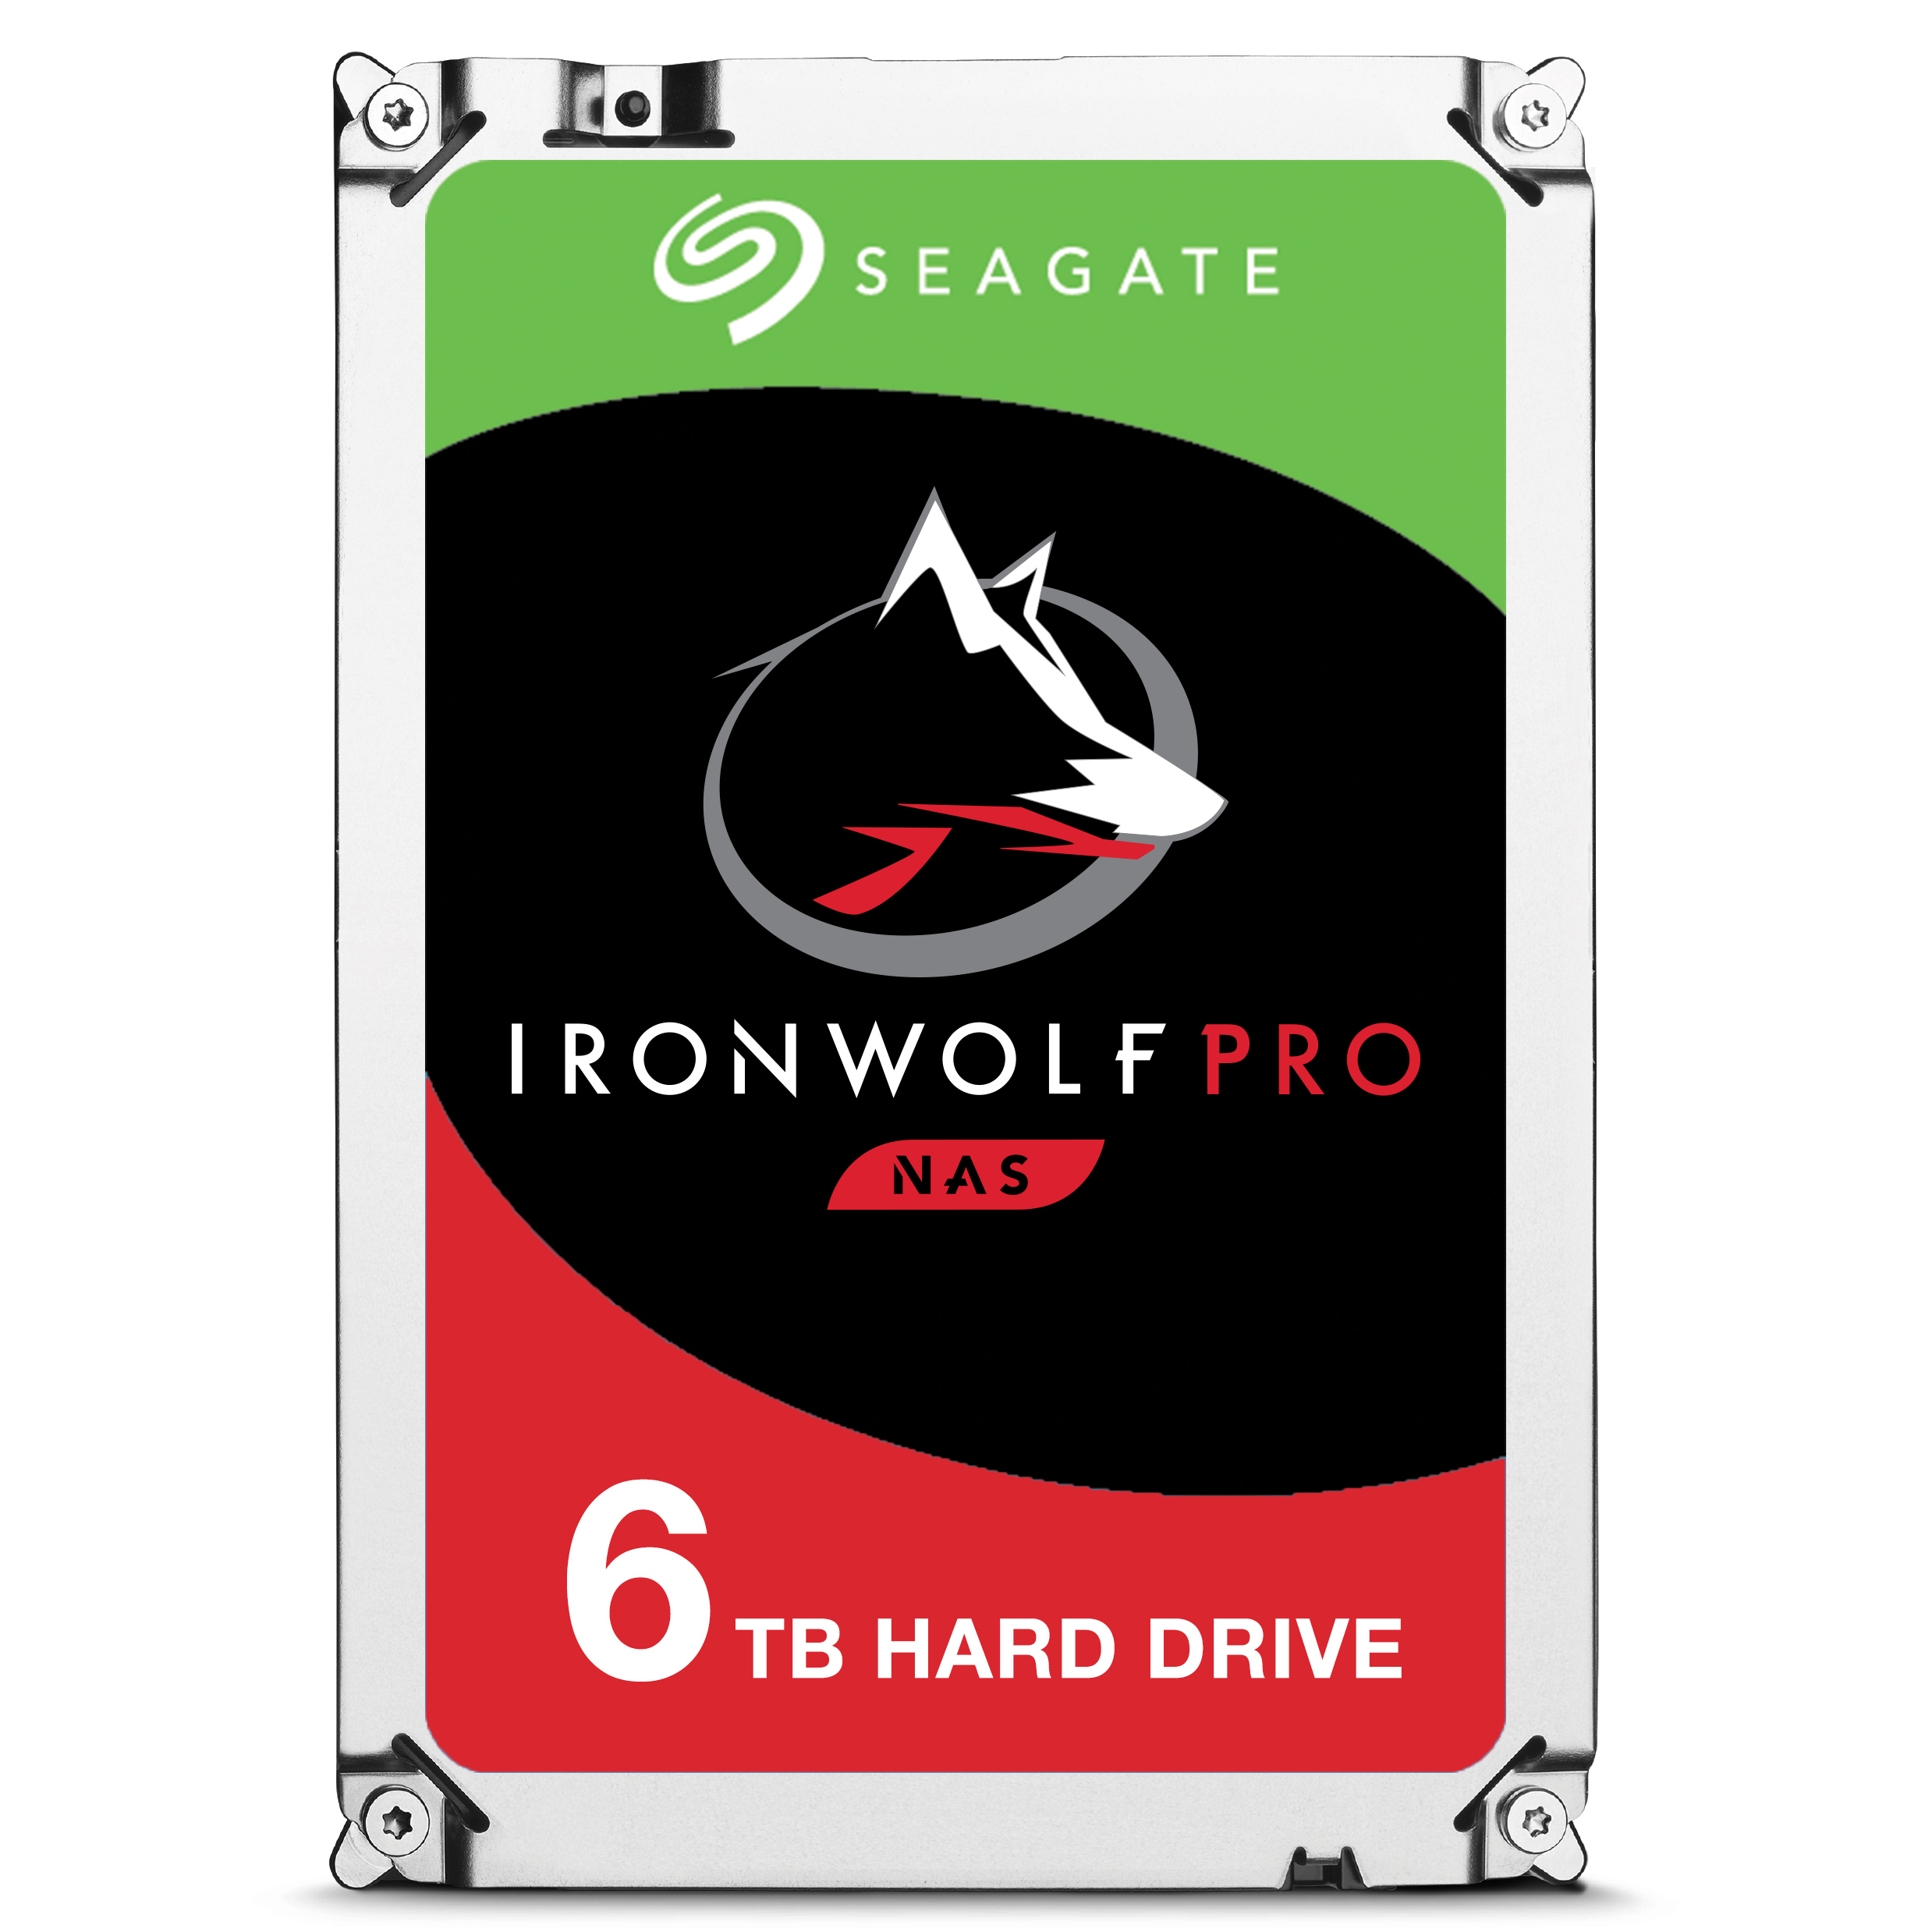 Ironwolf Pro 6tb Sata Seagate Nas Hdd Desktop St6000ne0023 763649111321